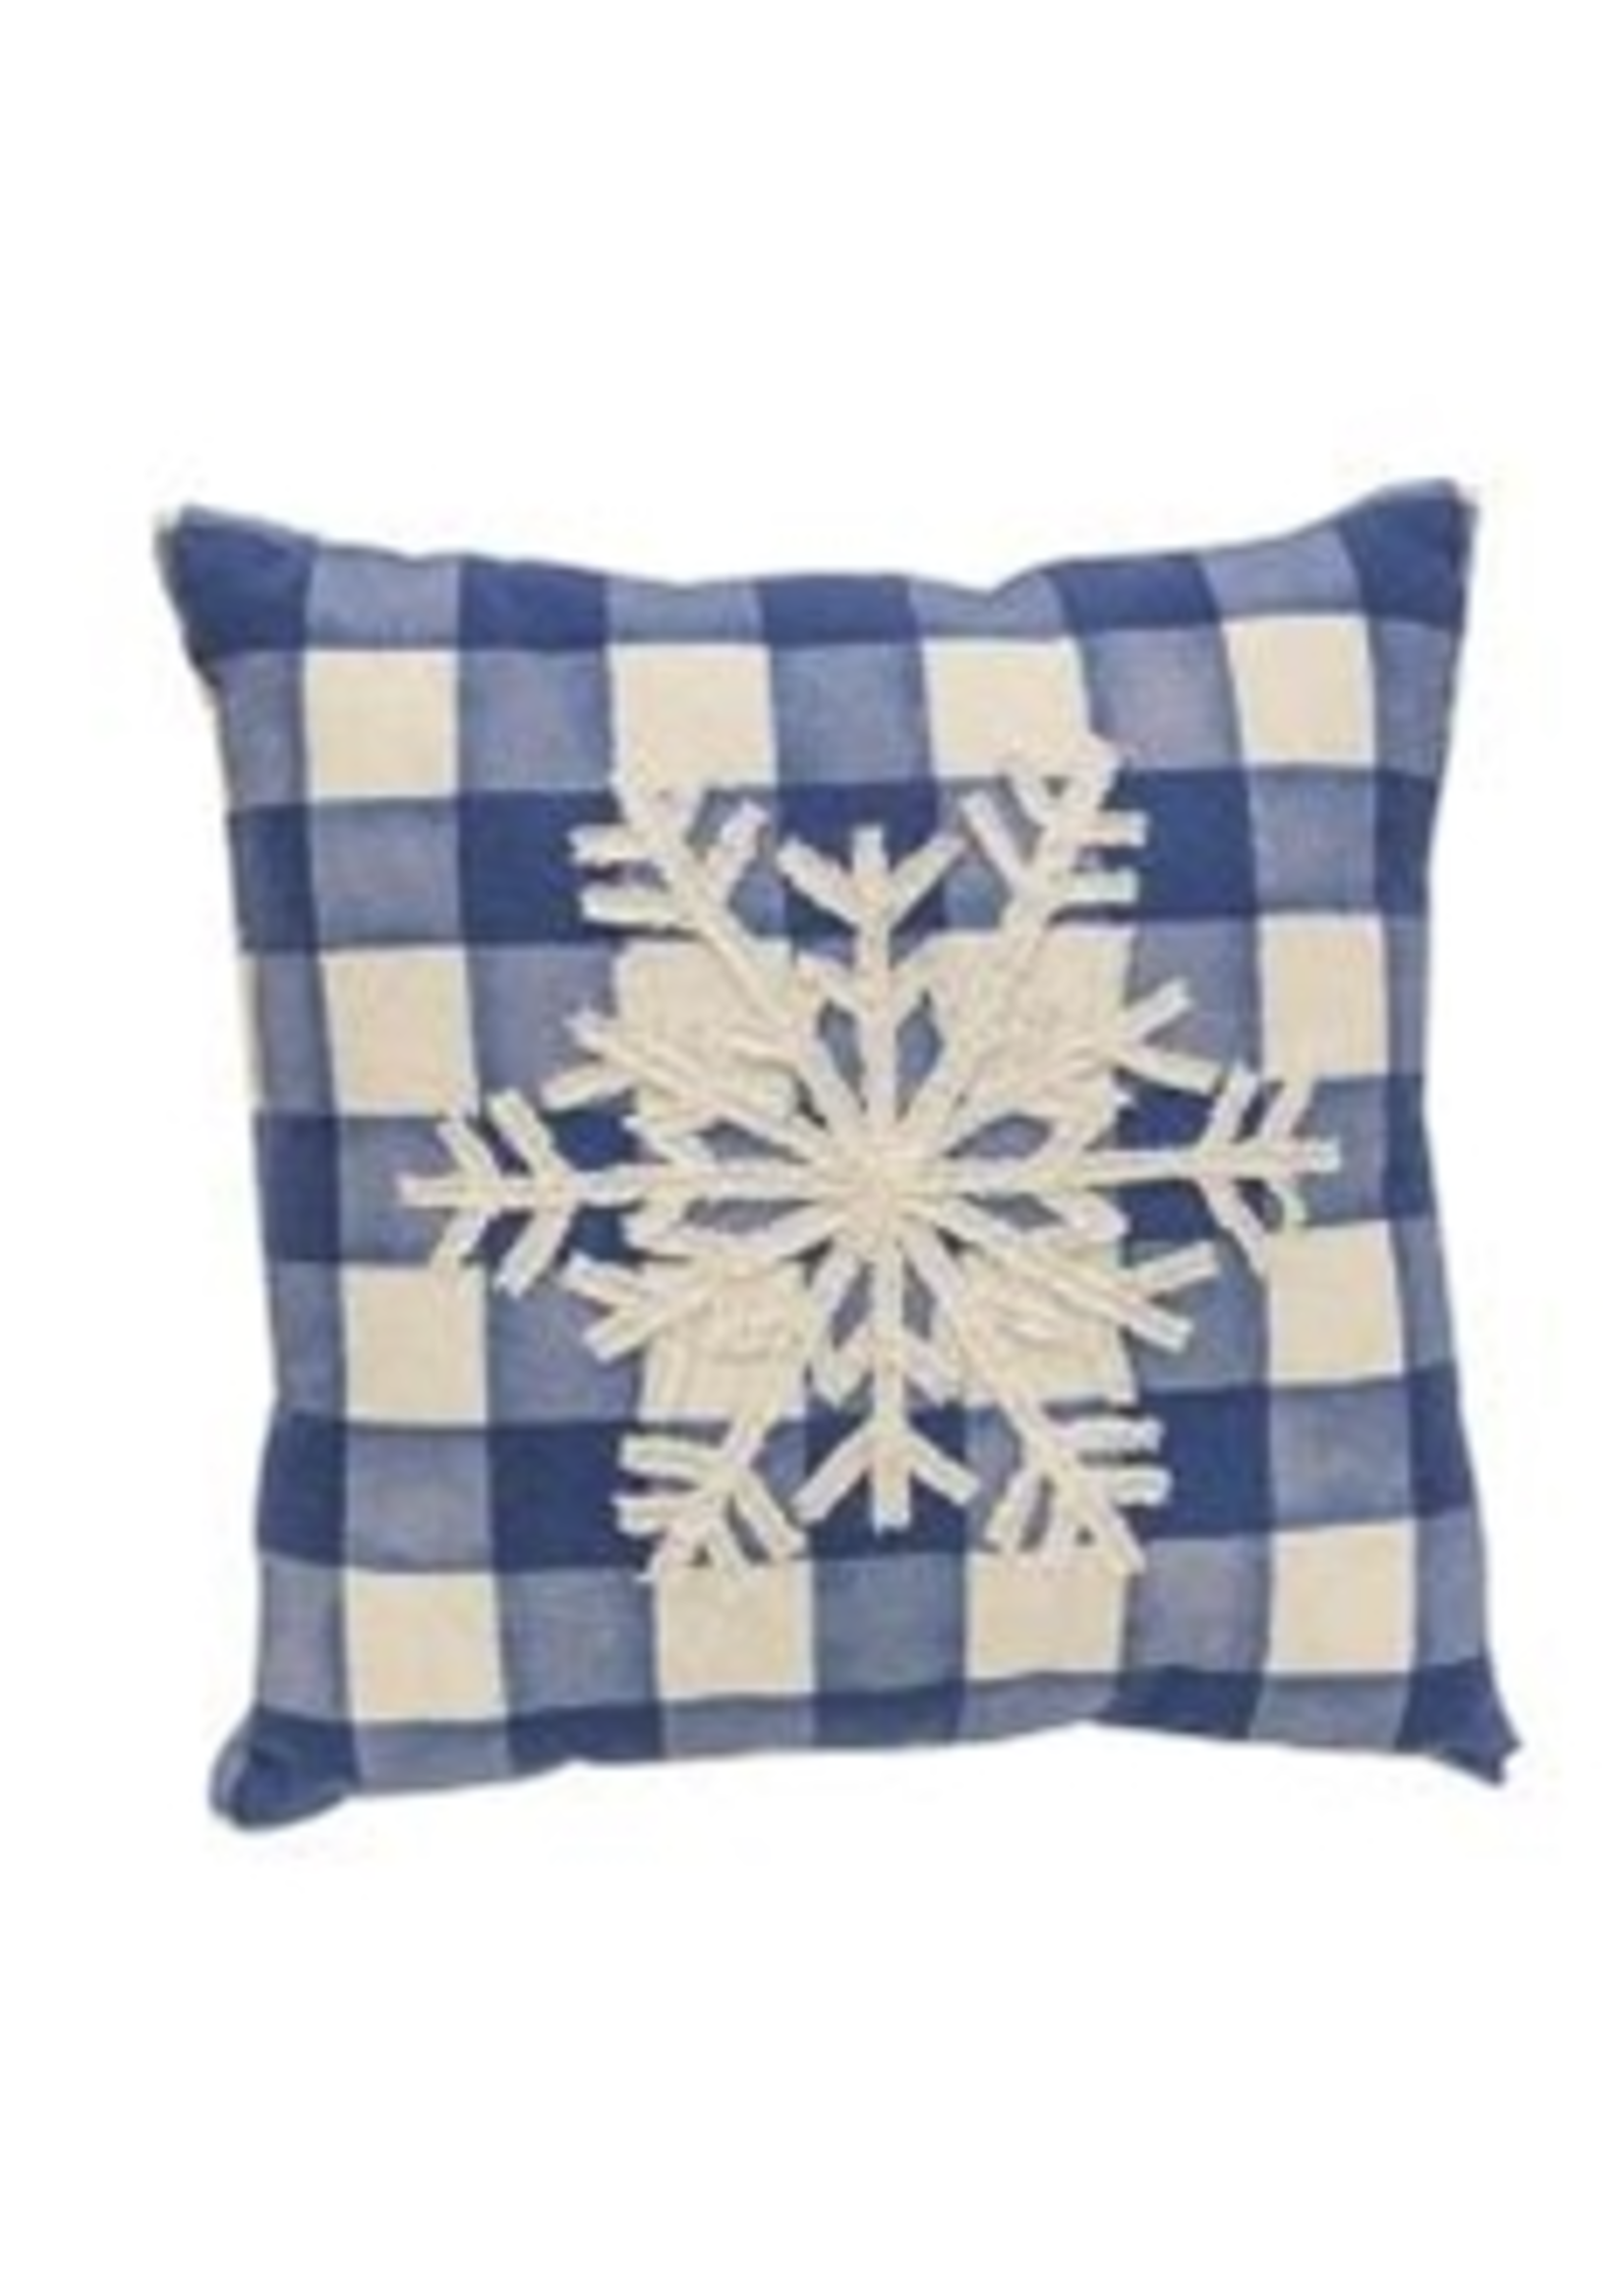 CWI Gifts Blue Check Snowfall Pillow 10"x10"